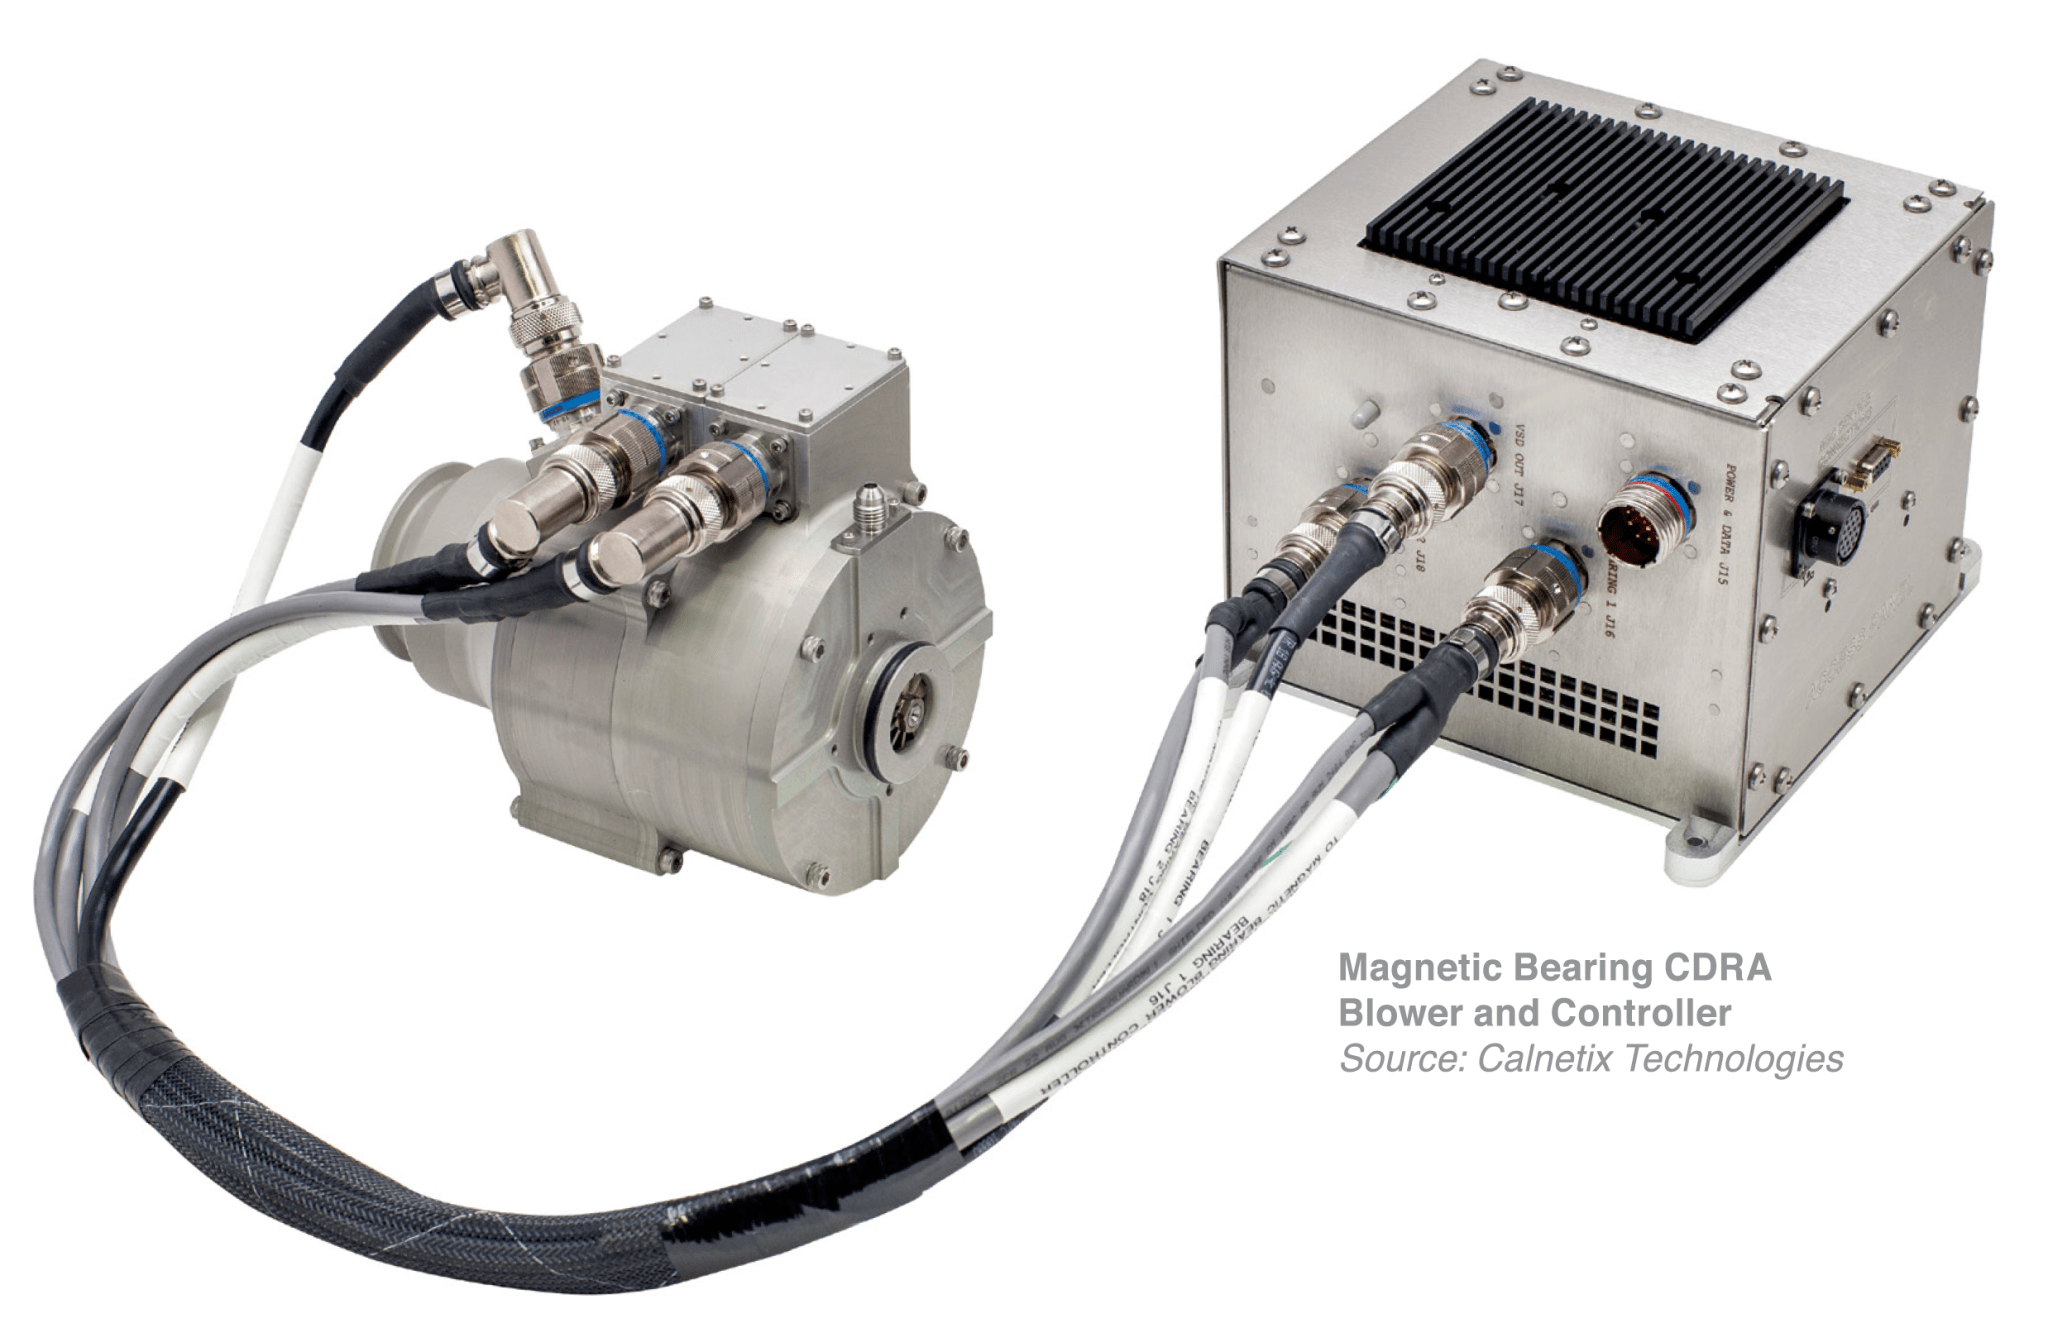 Magnetic Bearing CDRA  Blower and Controller
(Source: Calnetix Technologies)